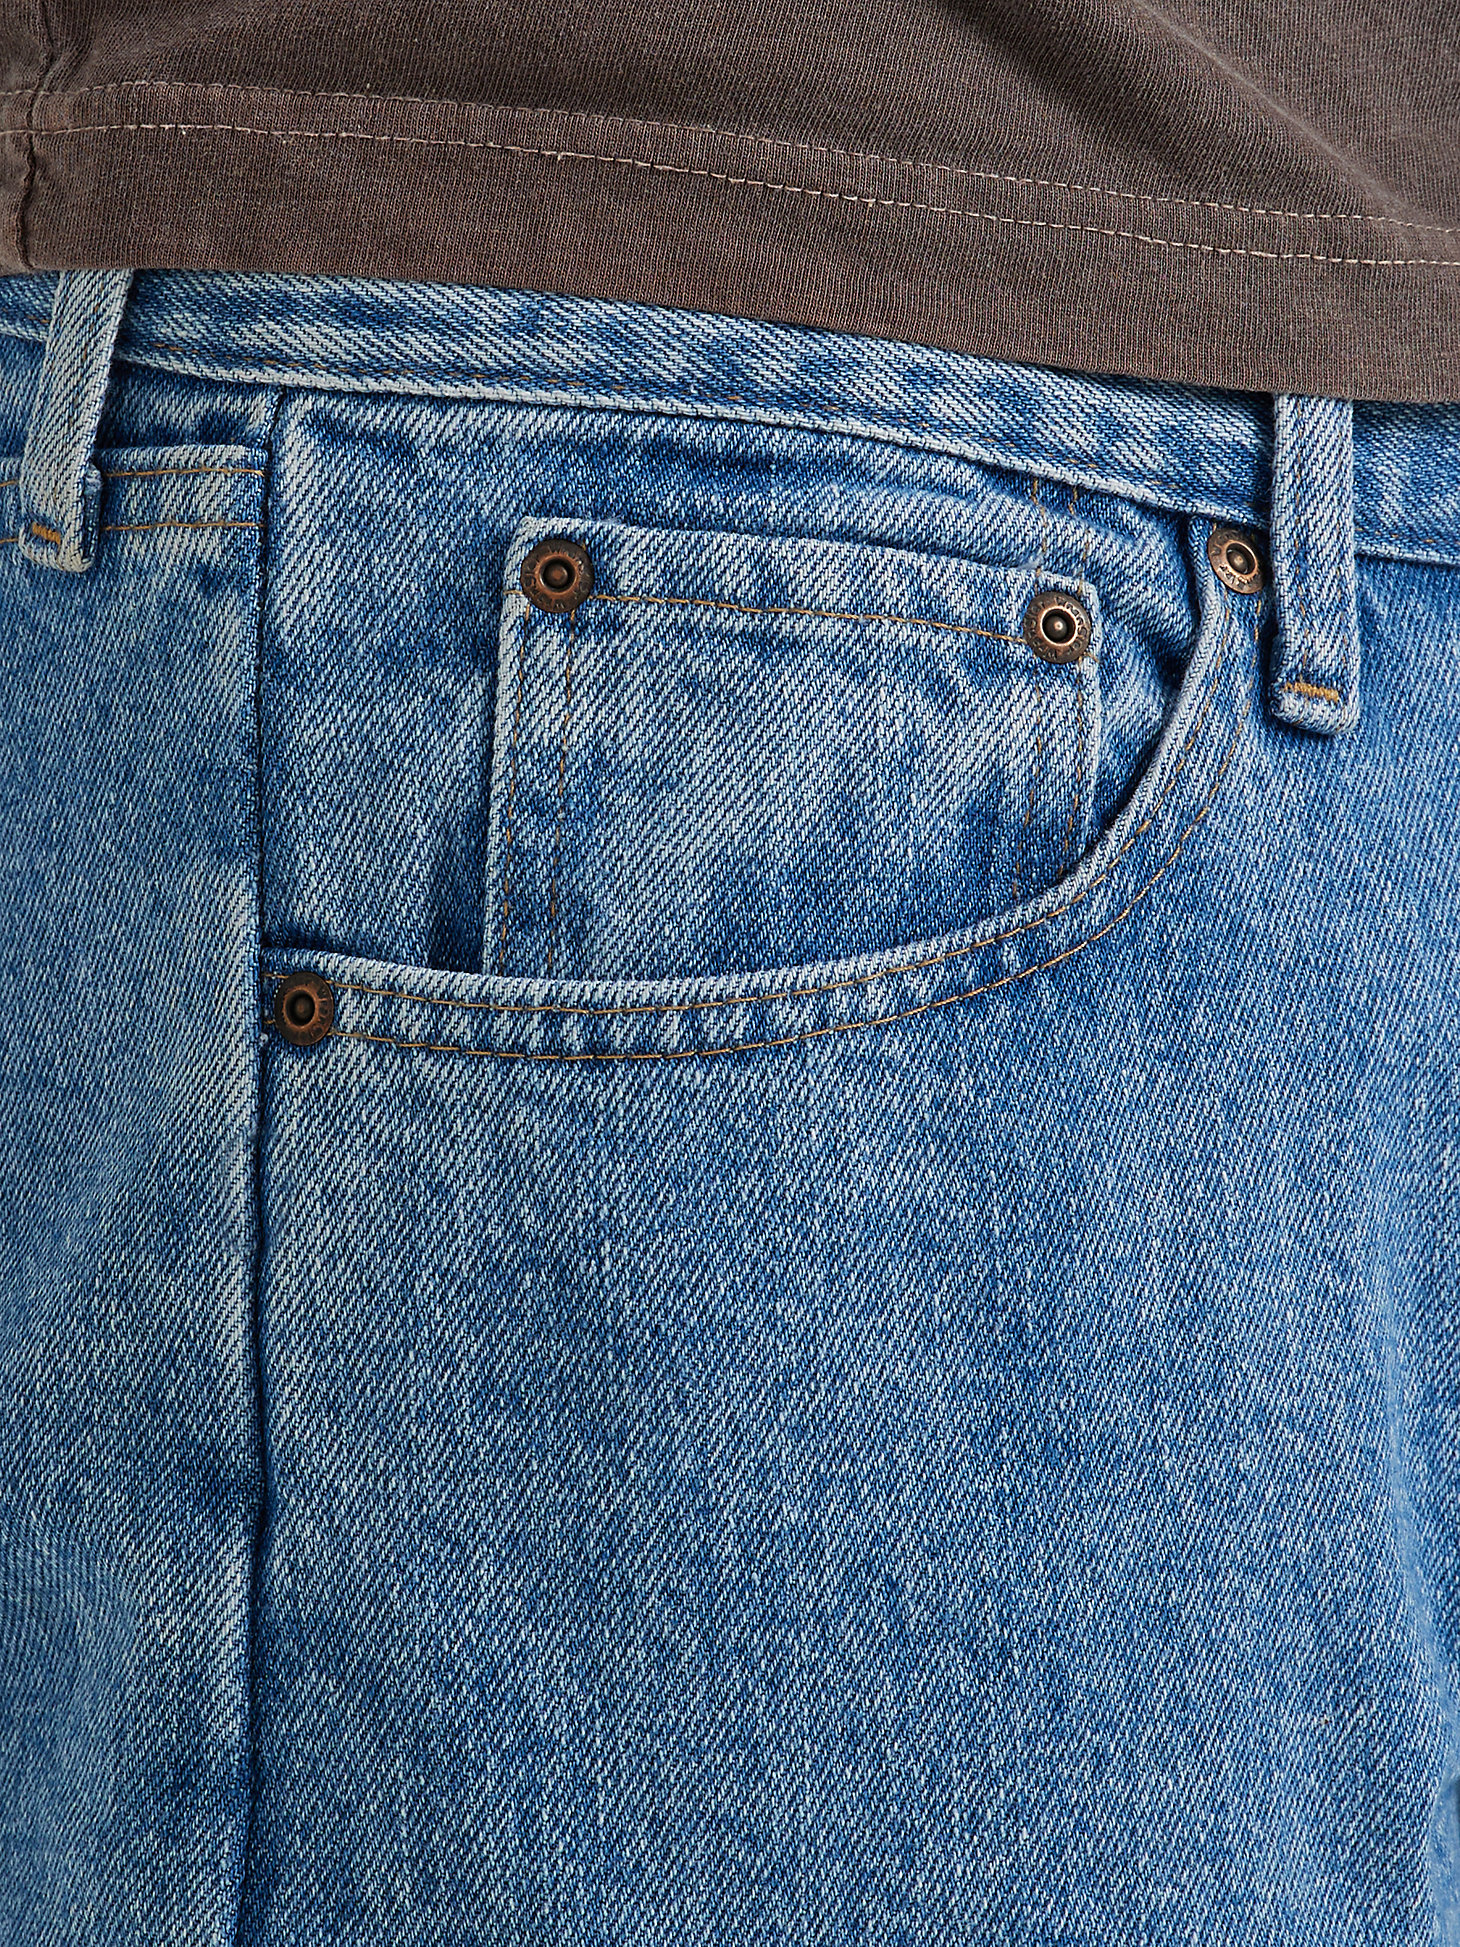 Wrangler® Five Star Premium Denim Relaxed Fit Jean in Stone Bleach alternative view 4